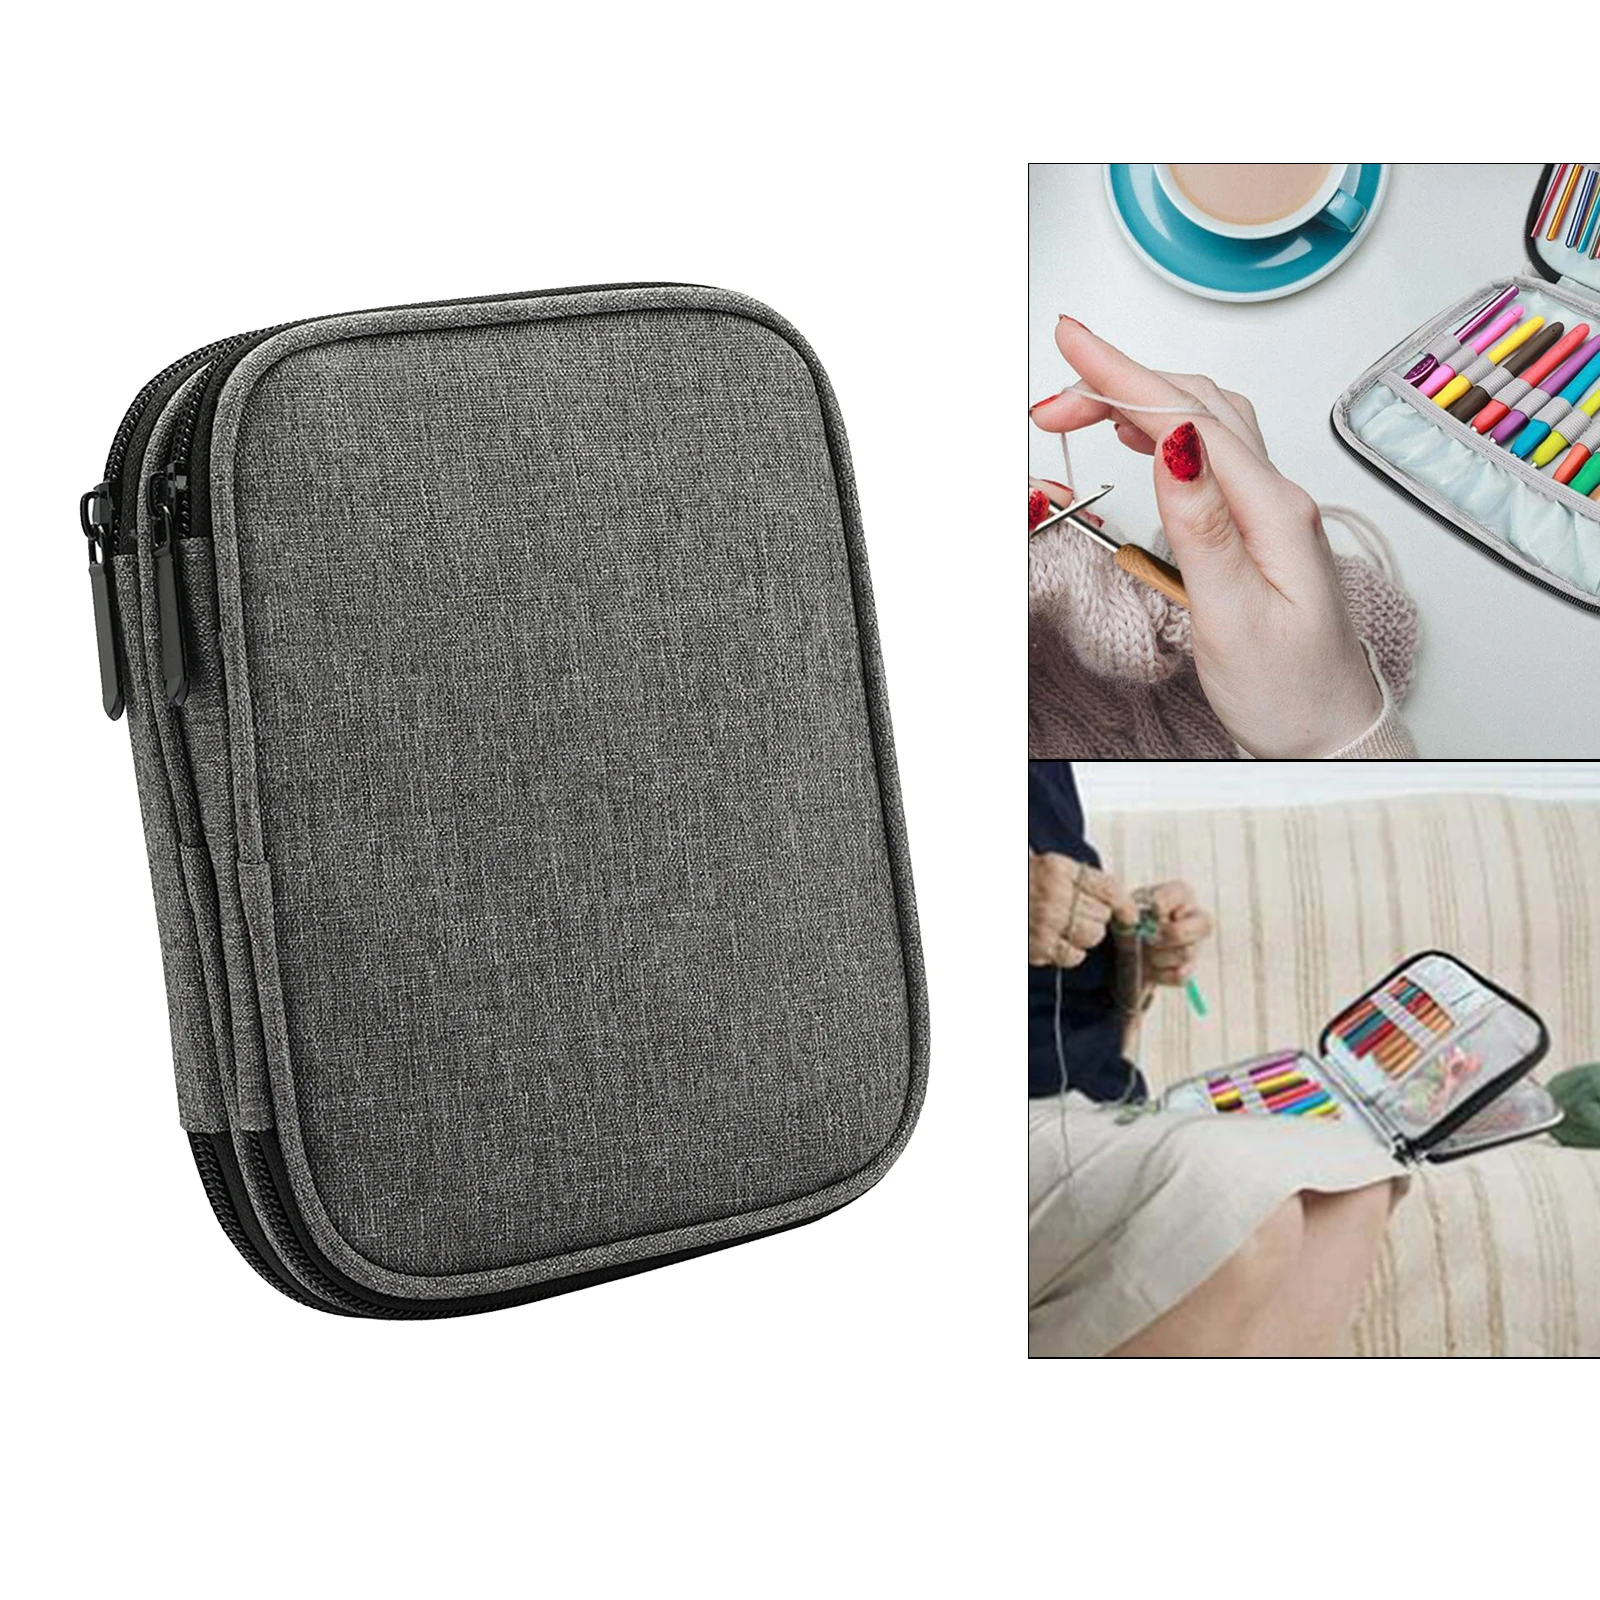 Portable Crochet Hook Case Knitting Needles Organizer Zipper Bag Storage Tote with Web Pockets & Slots Oxford Fabric Case